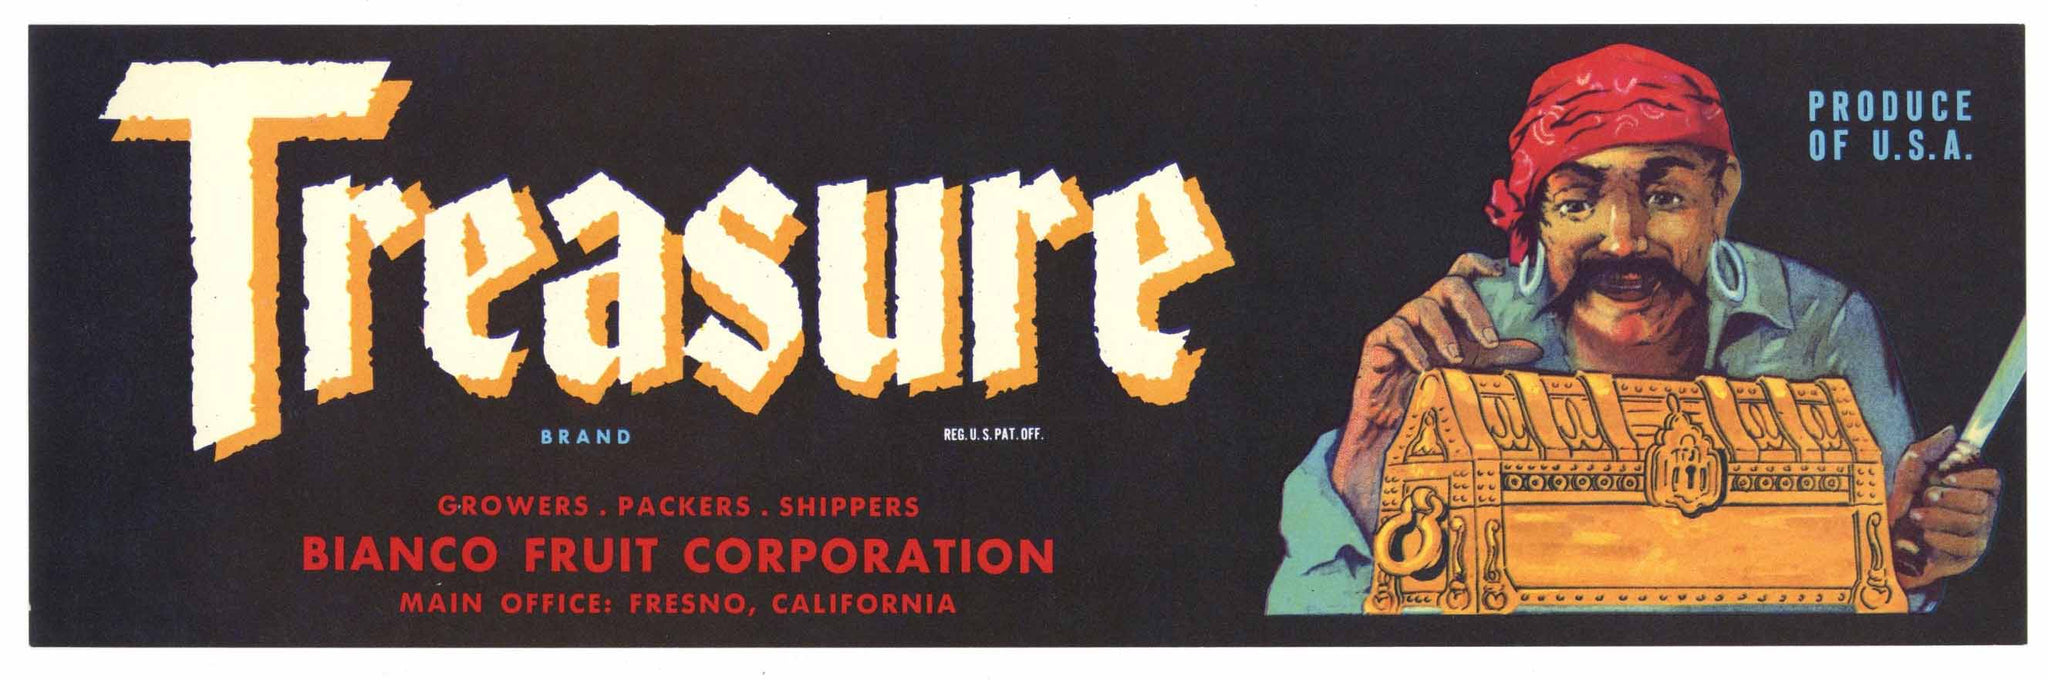 Treasure Brand Vintage Fresno Fruit Crate Label